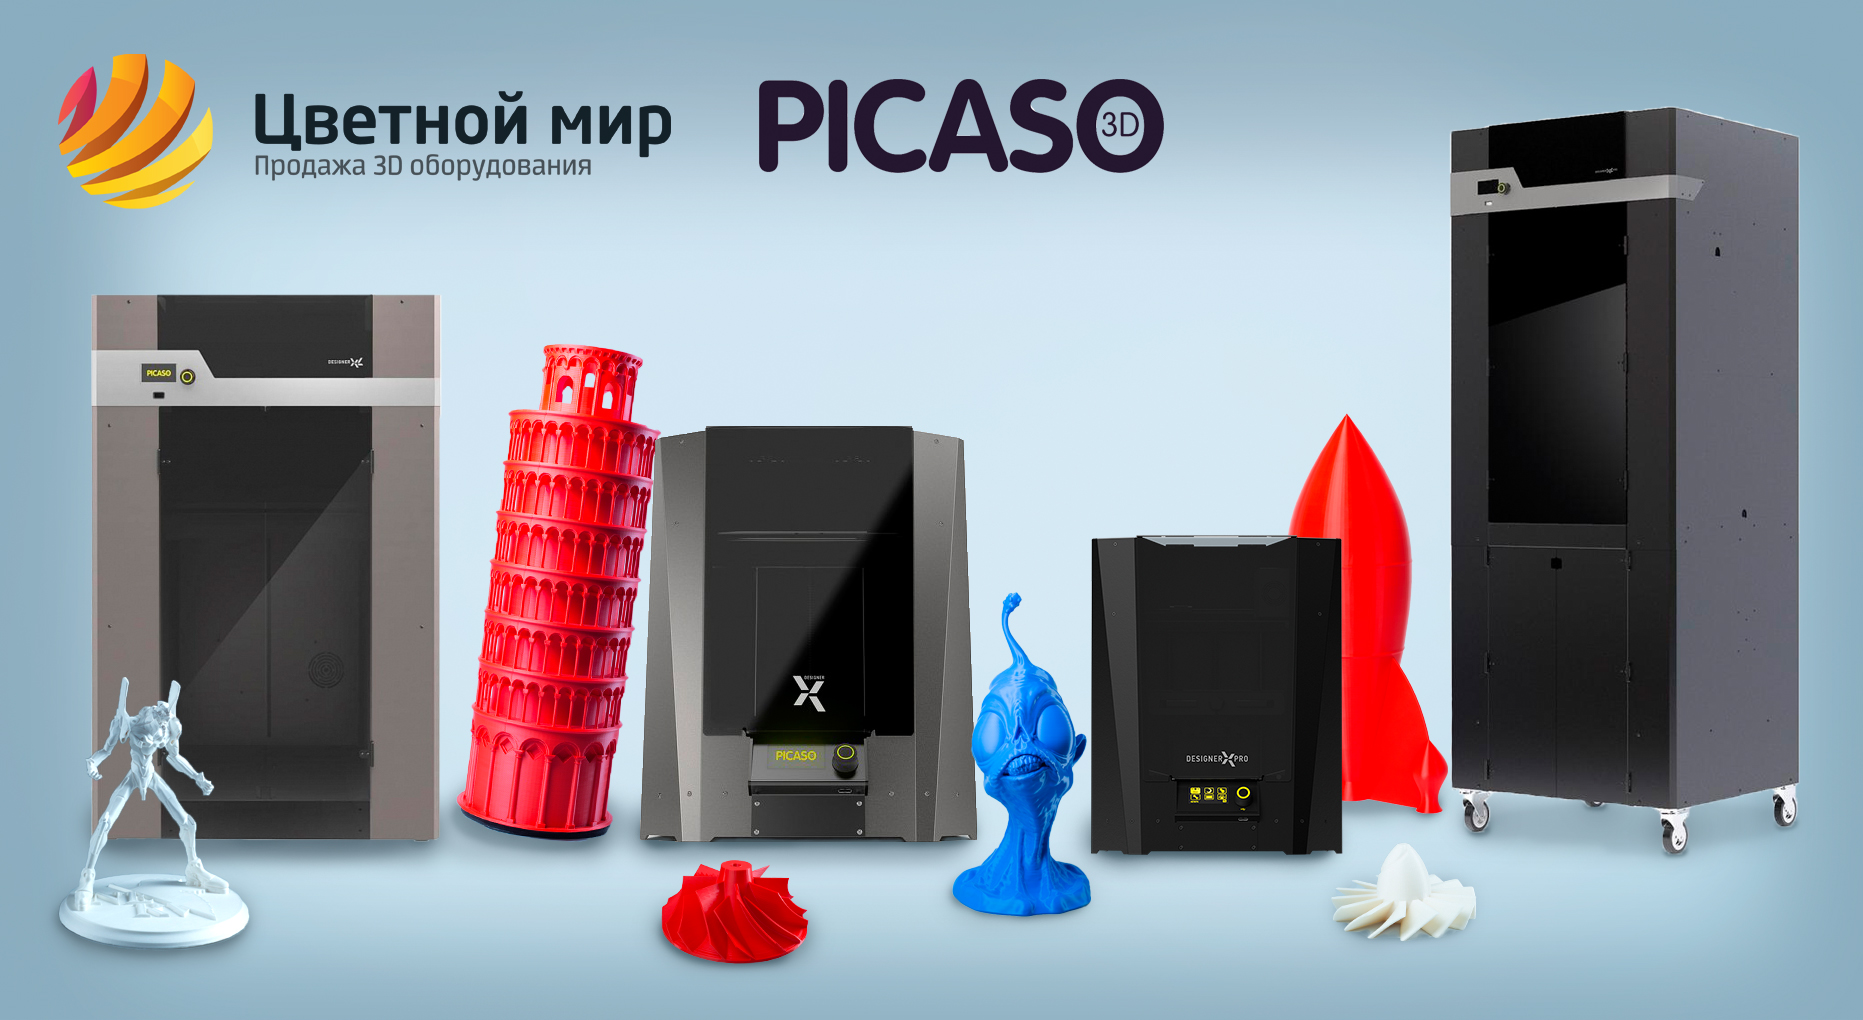 Picaso 3d логотип. Picaso 3d. Компания Picaso преимущества. WA Picaso Designer x.